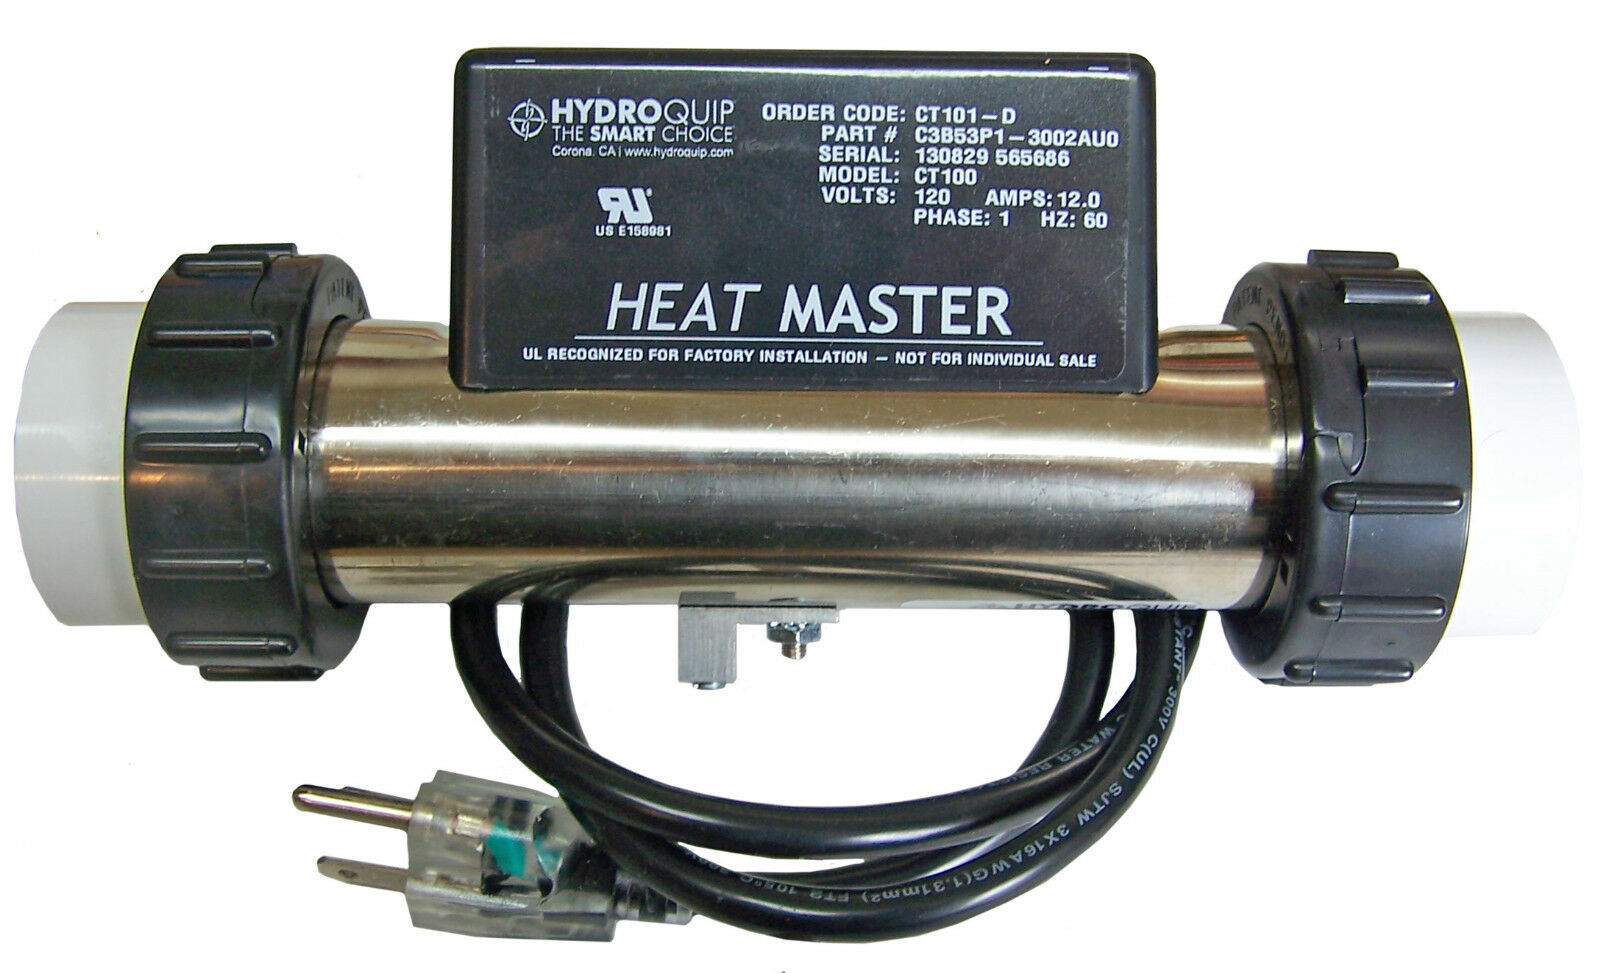 Jetted Bathtub Heater - Hydro-quip - Heat Master (vac) - 1.5kw Output, 120volts